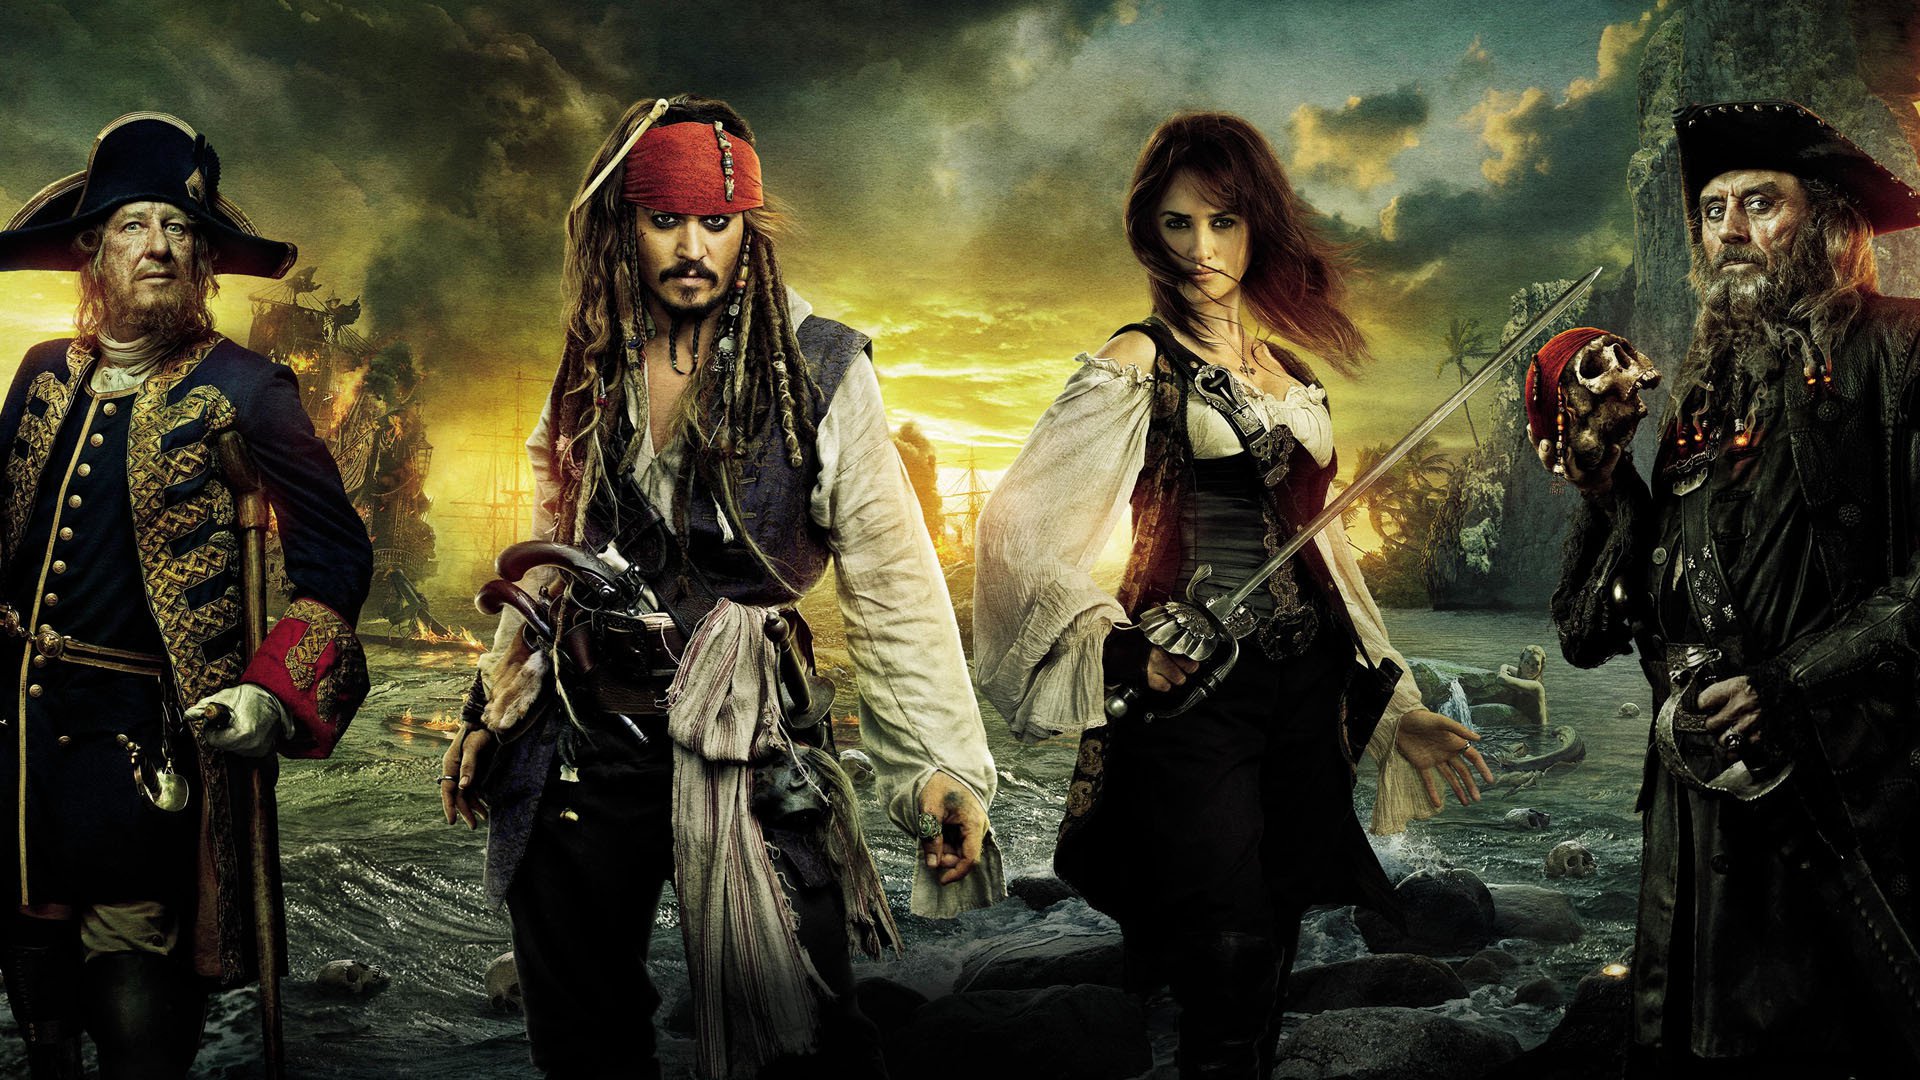 Pirates of the Caribbean: I främmande farvatten